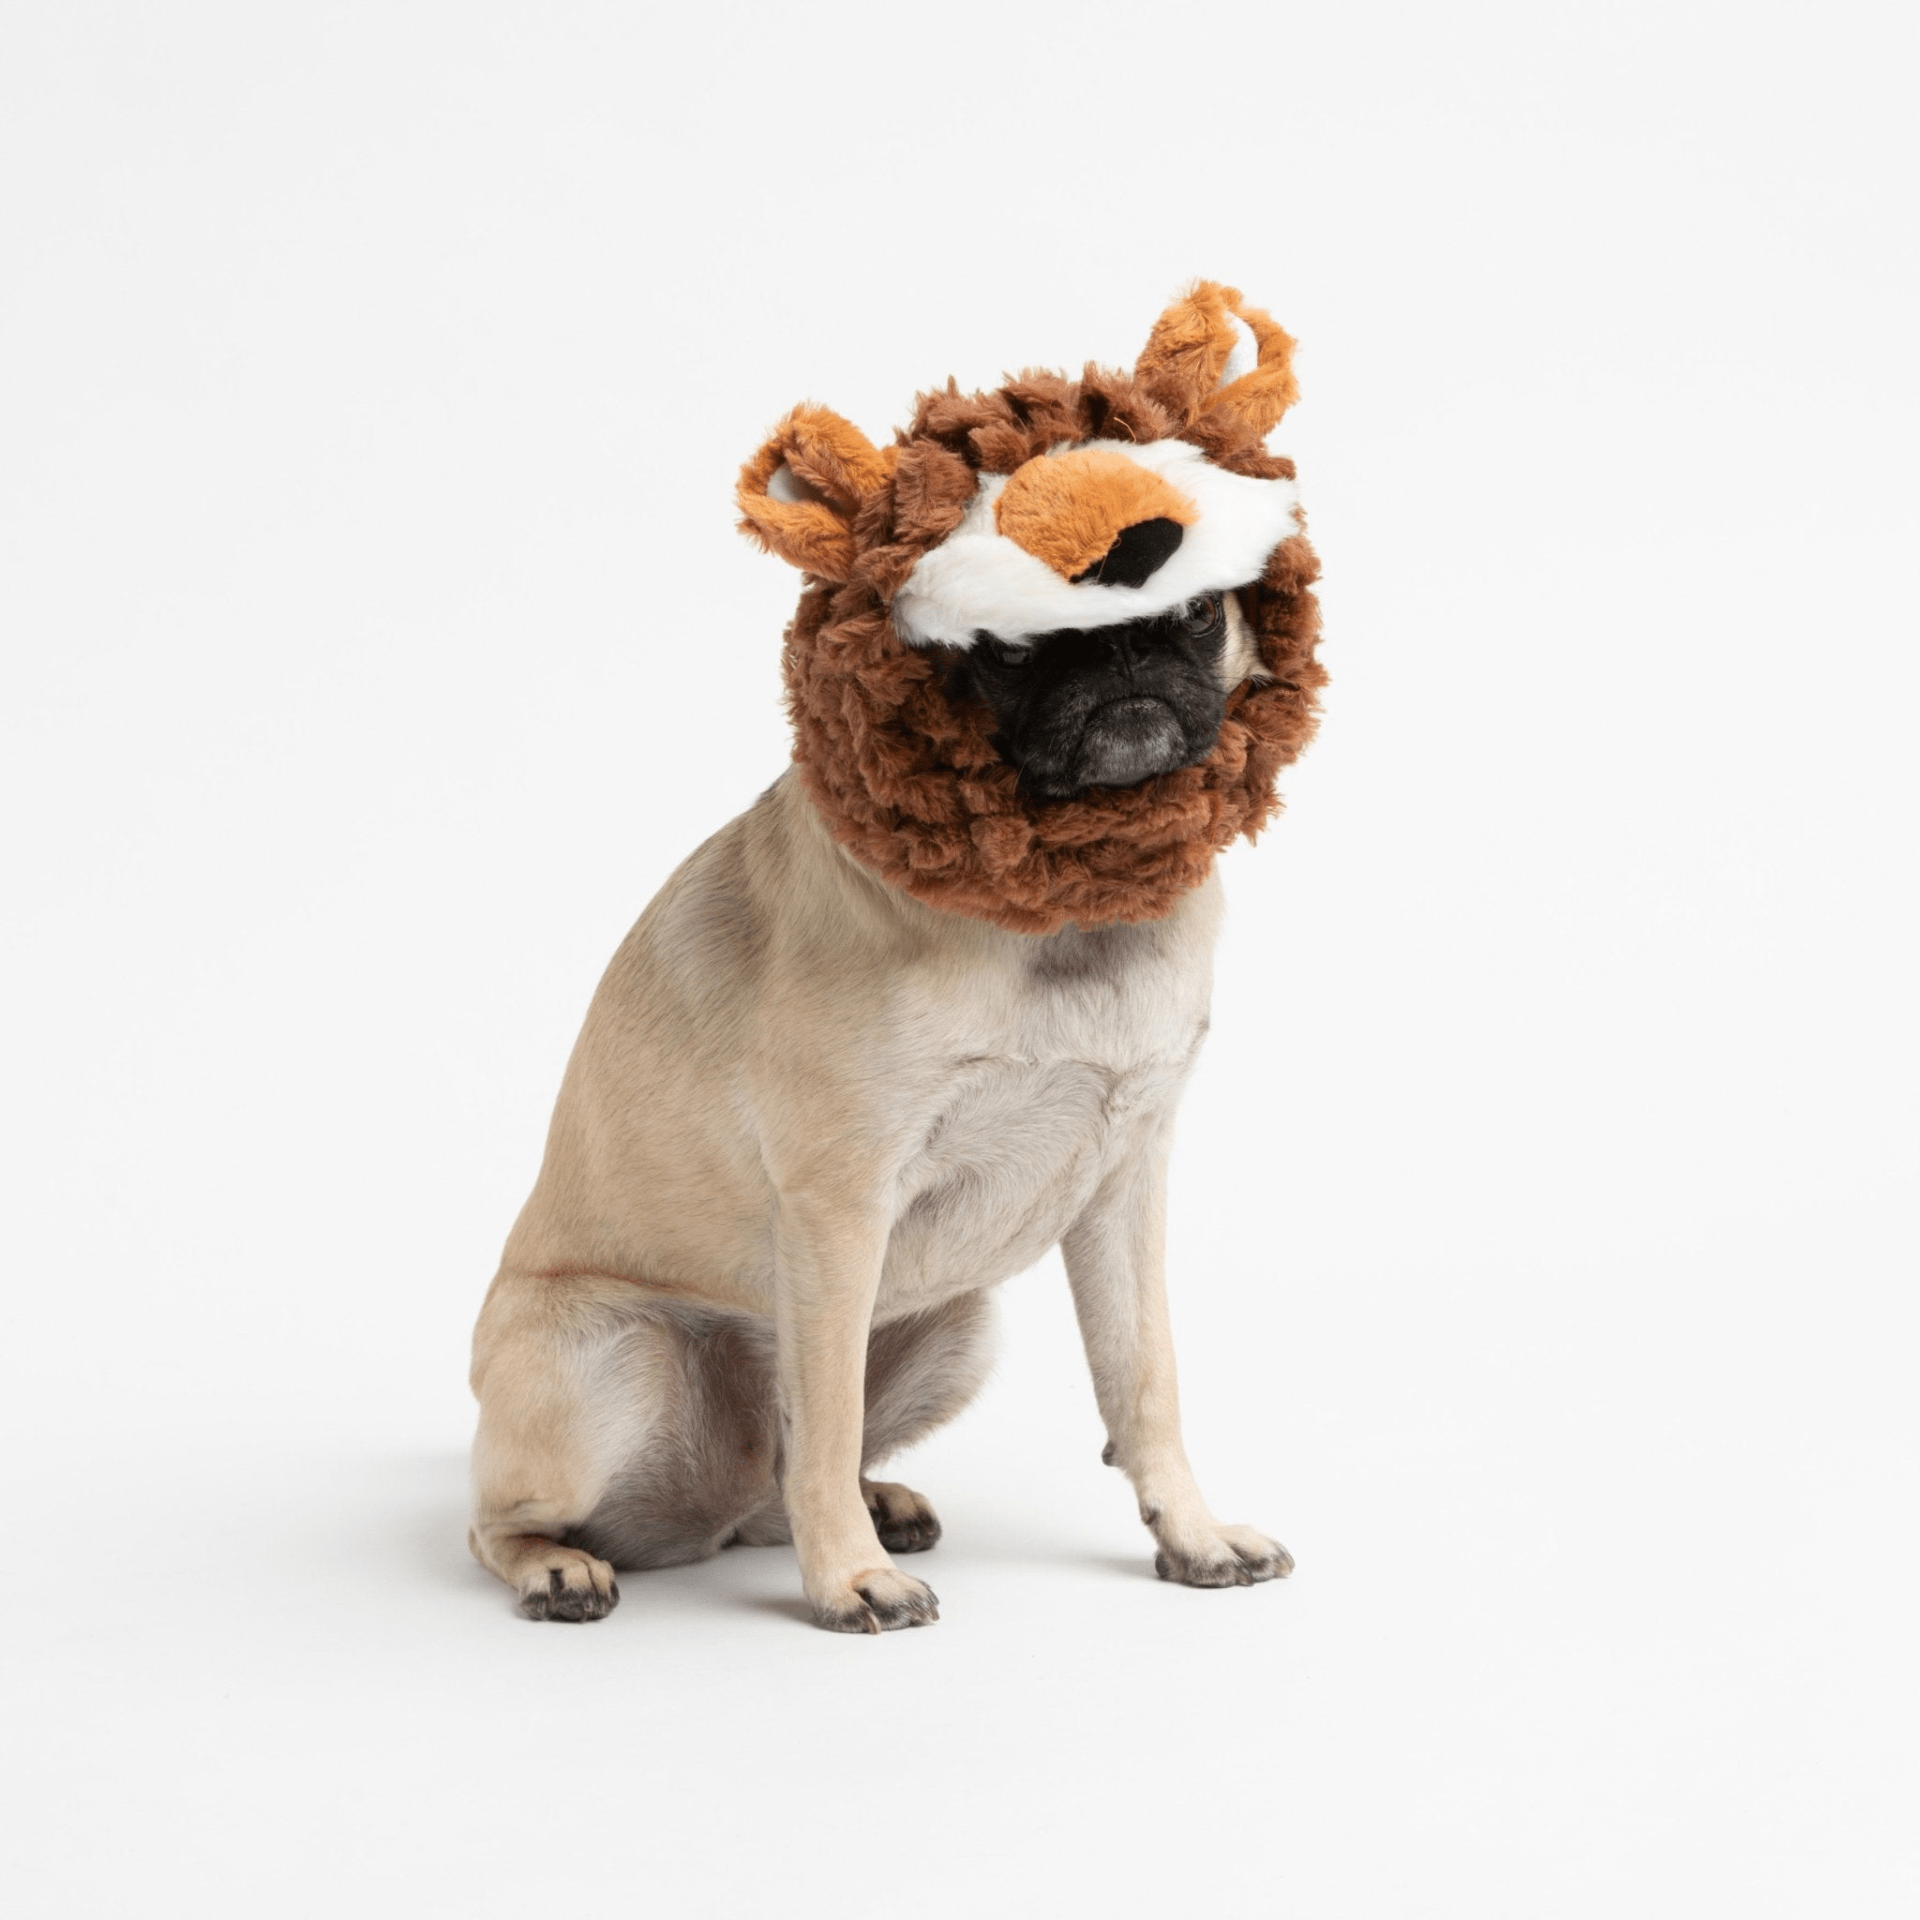 Dog and Pet Stuff Lion Wig Costume